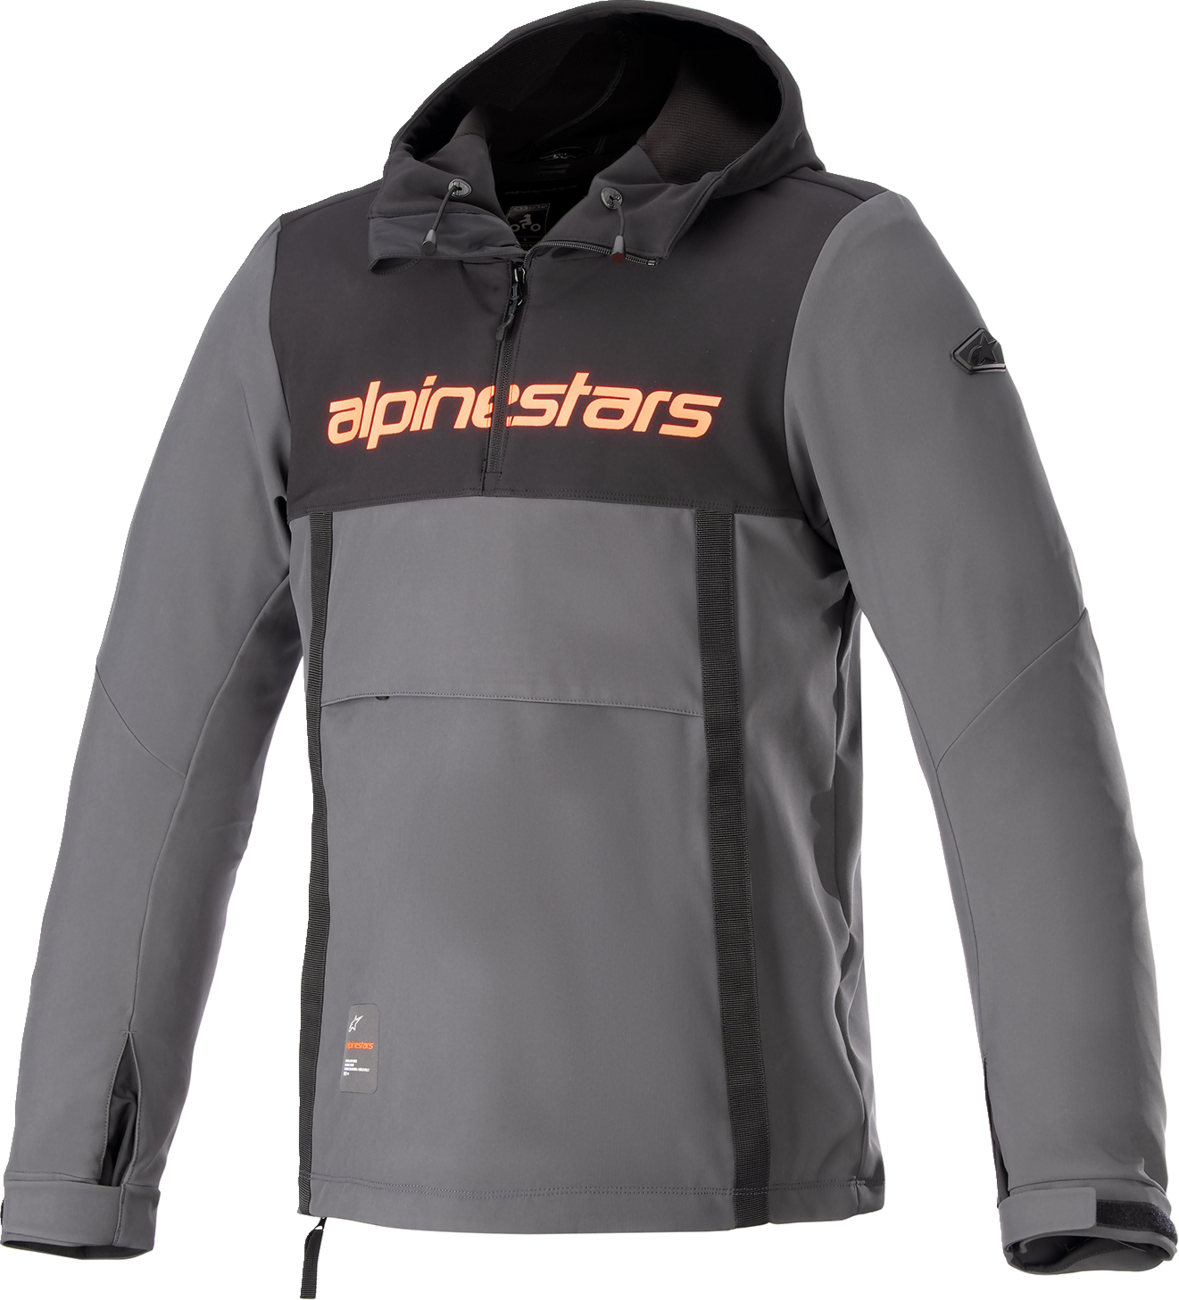 ALPINESTARS Sherpa Jacket - Black/Gray - Small 4208123-1134-S